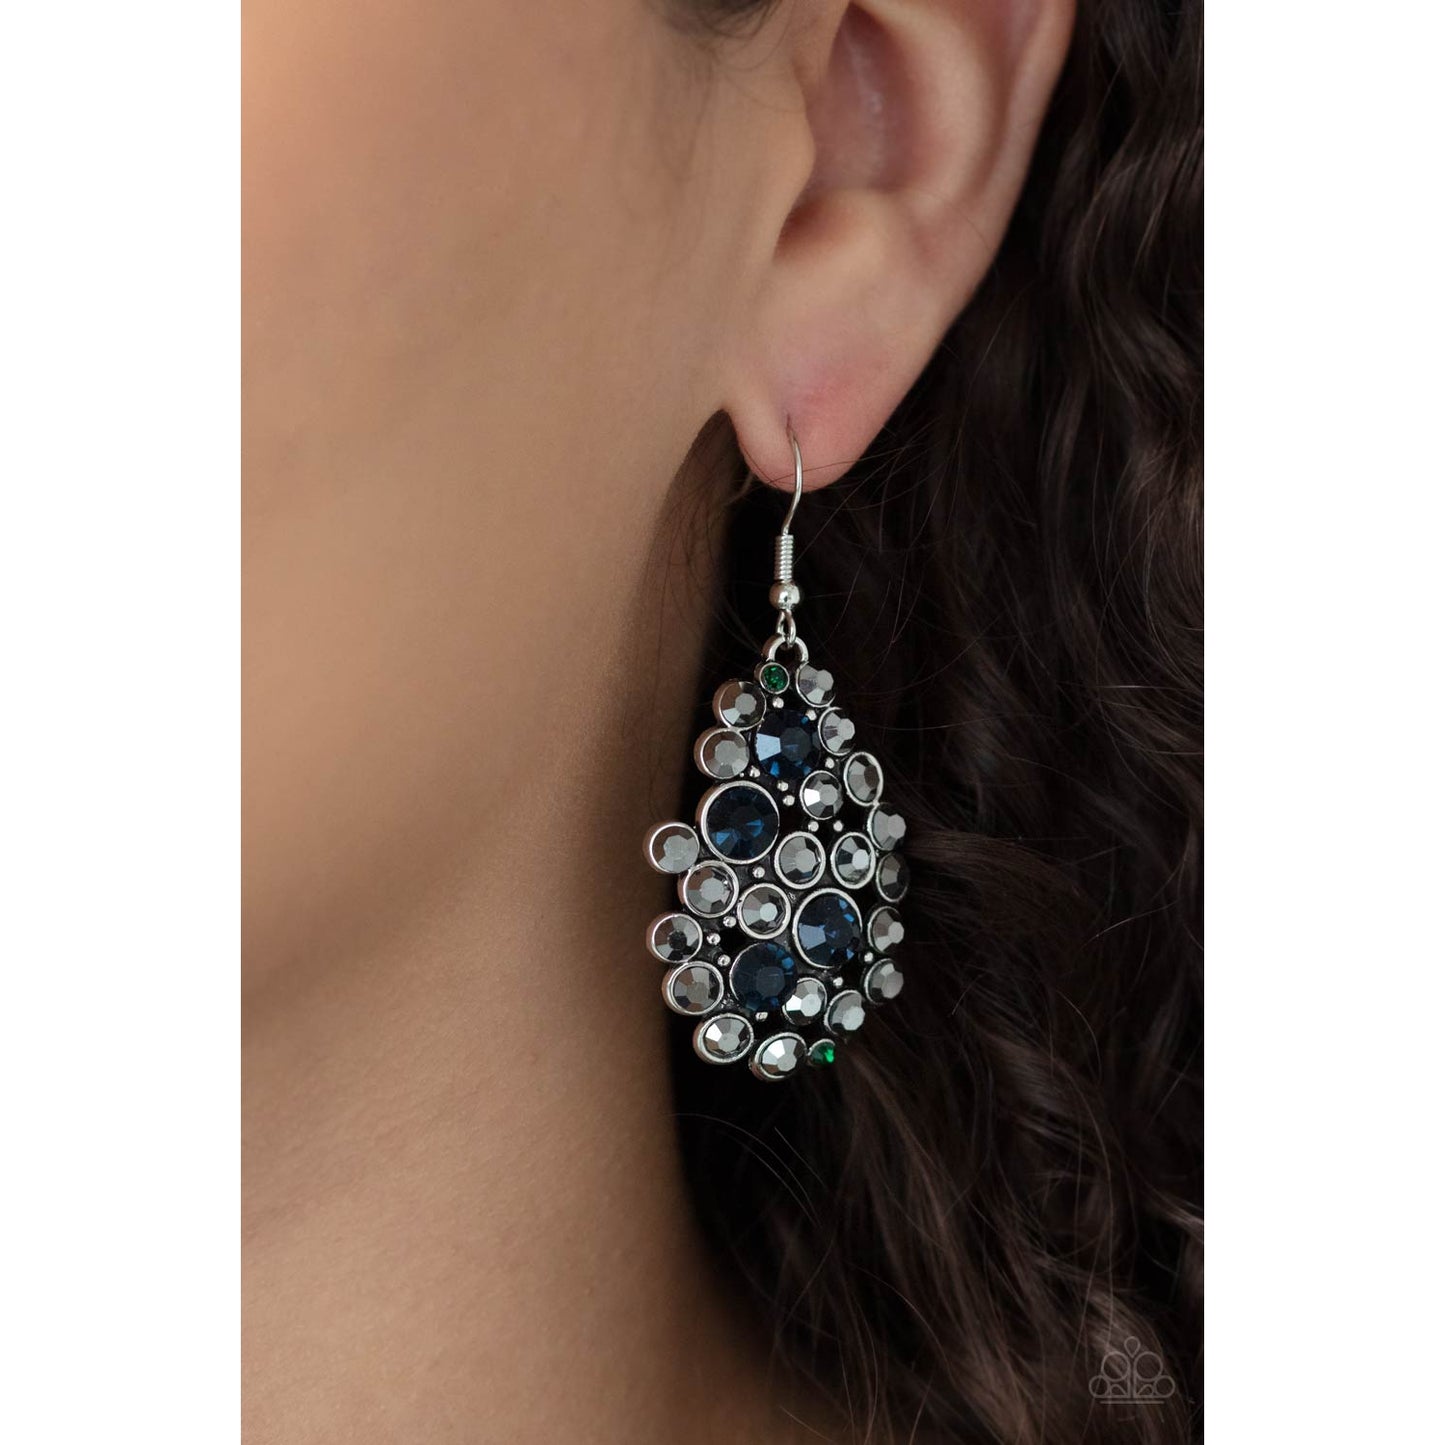 Smolder Effect - Multi Rhinestone Earrings - Paparazzi Accessories - GlaMarous Titi Jewels